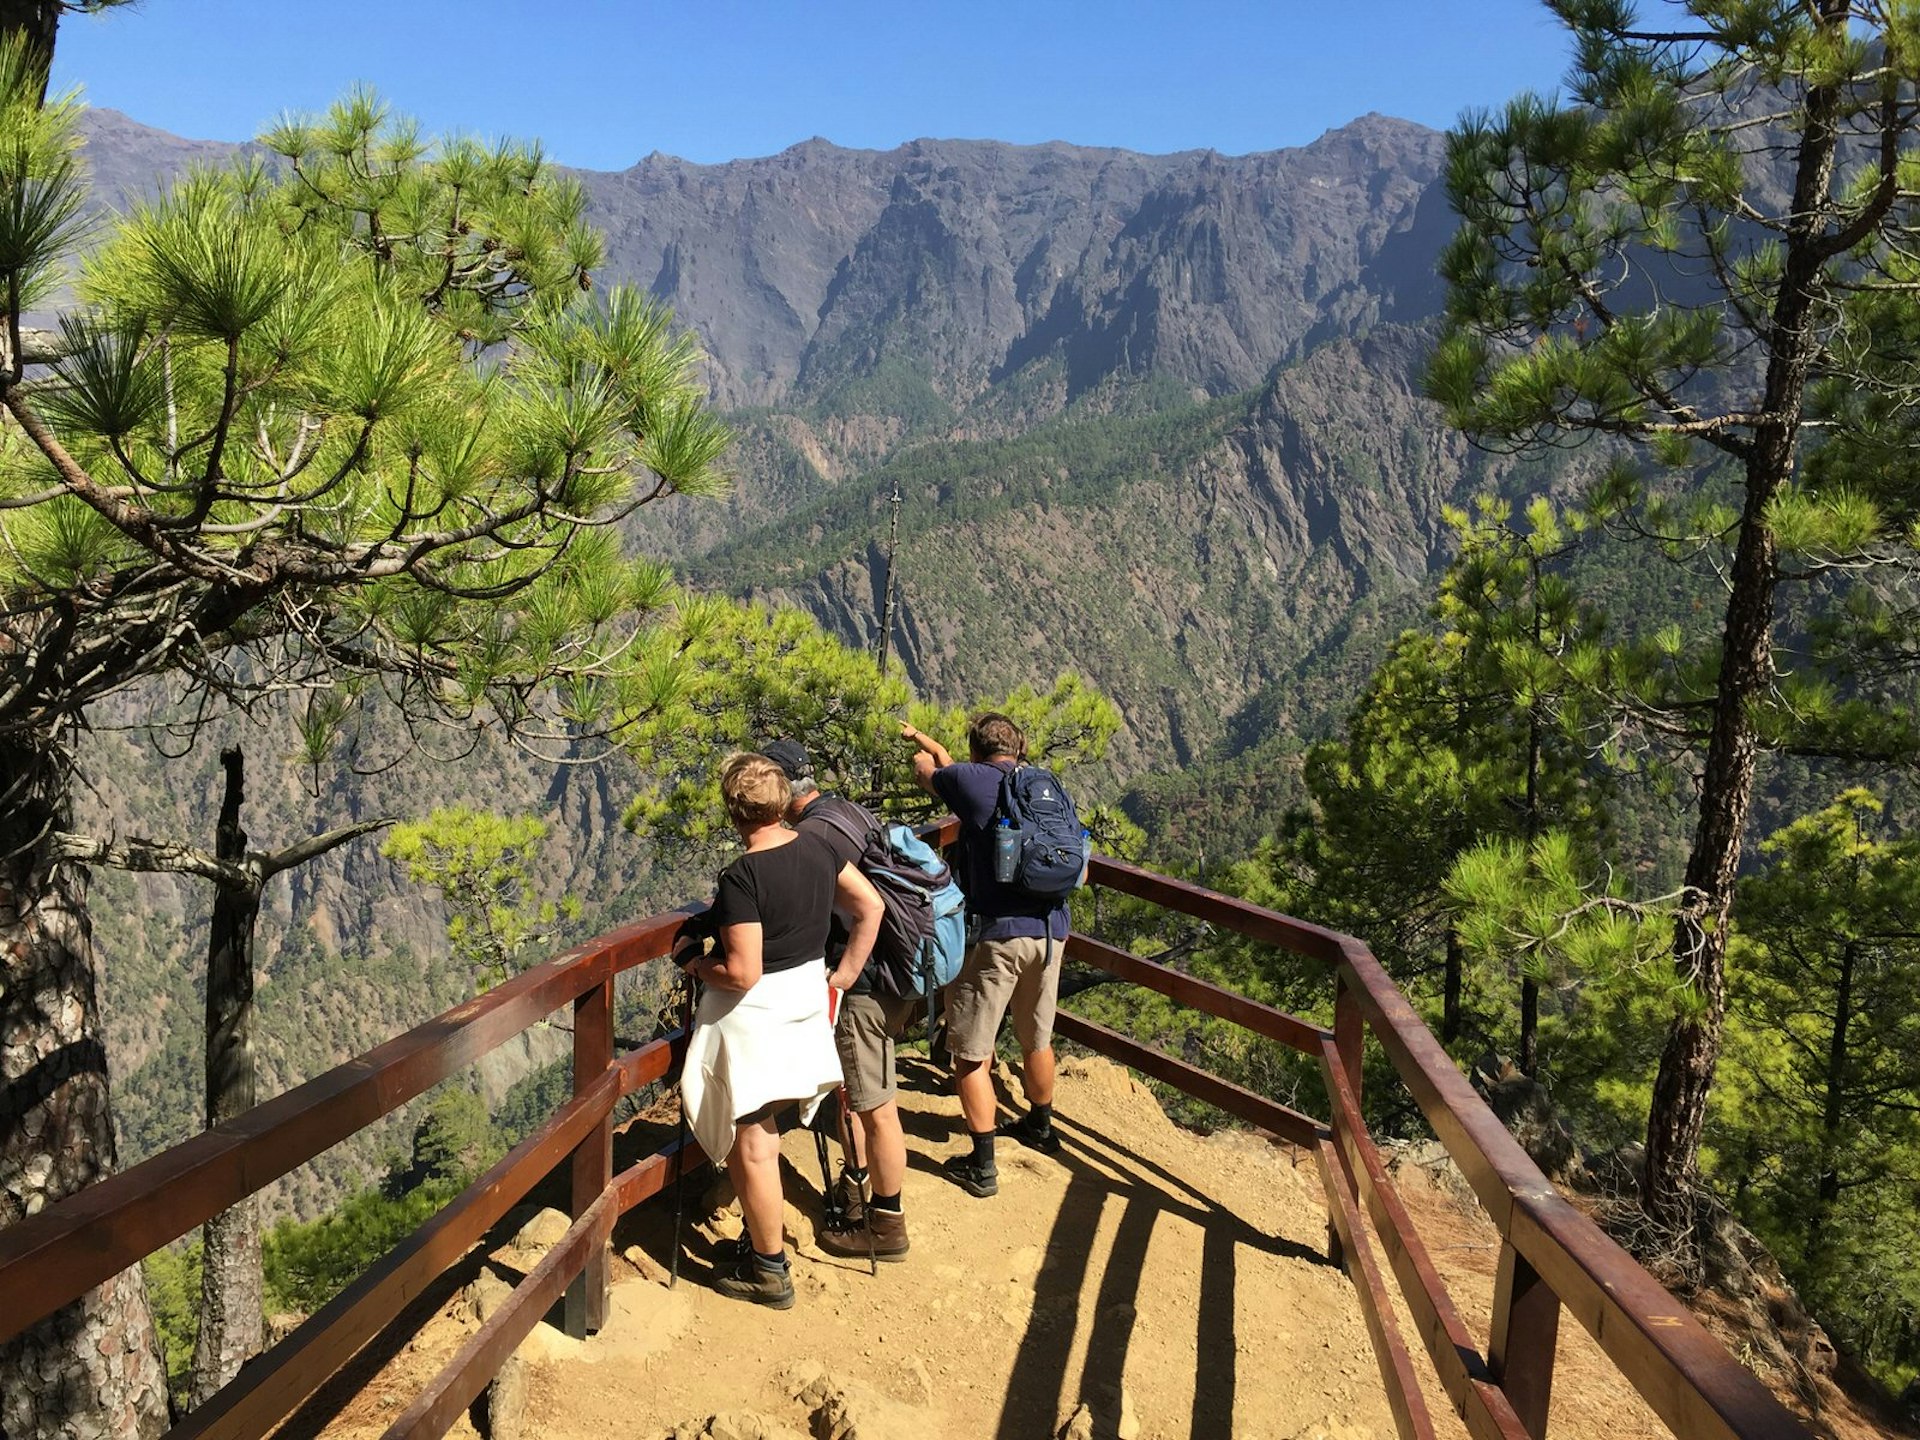 Taking in the view at Mirador de la Cumbrecita © Tom Stainer / Lonely Planet